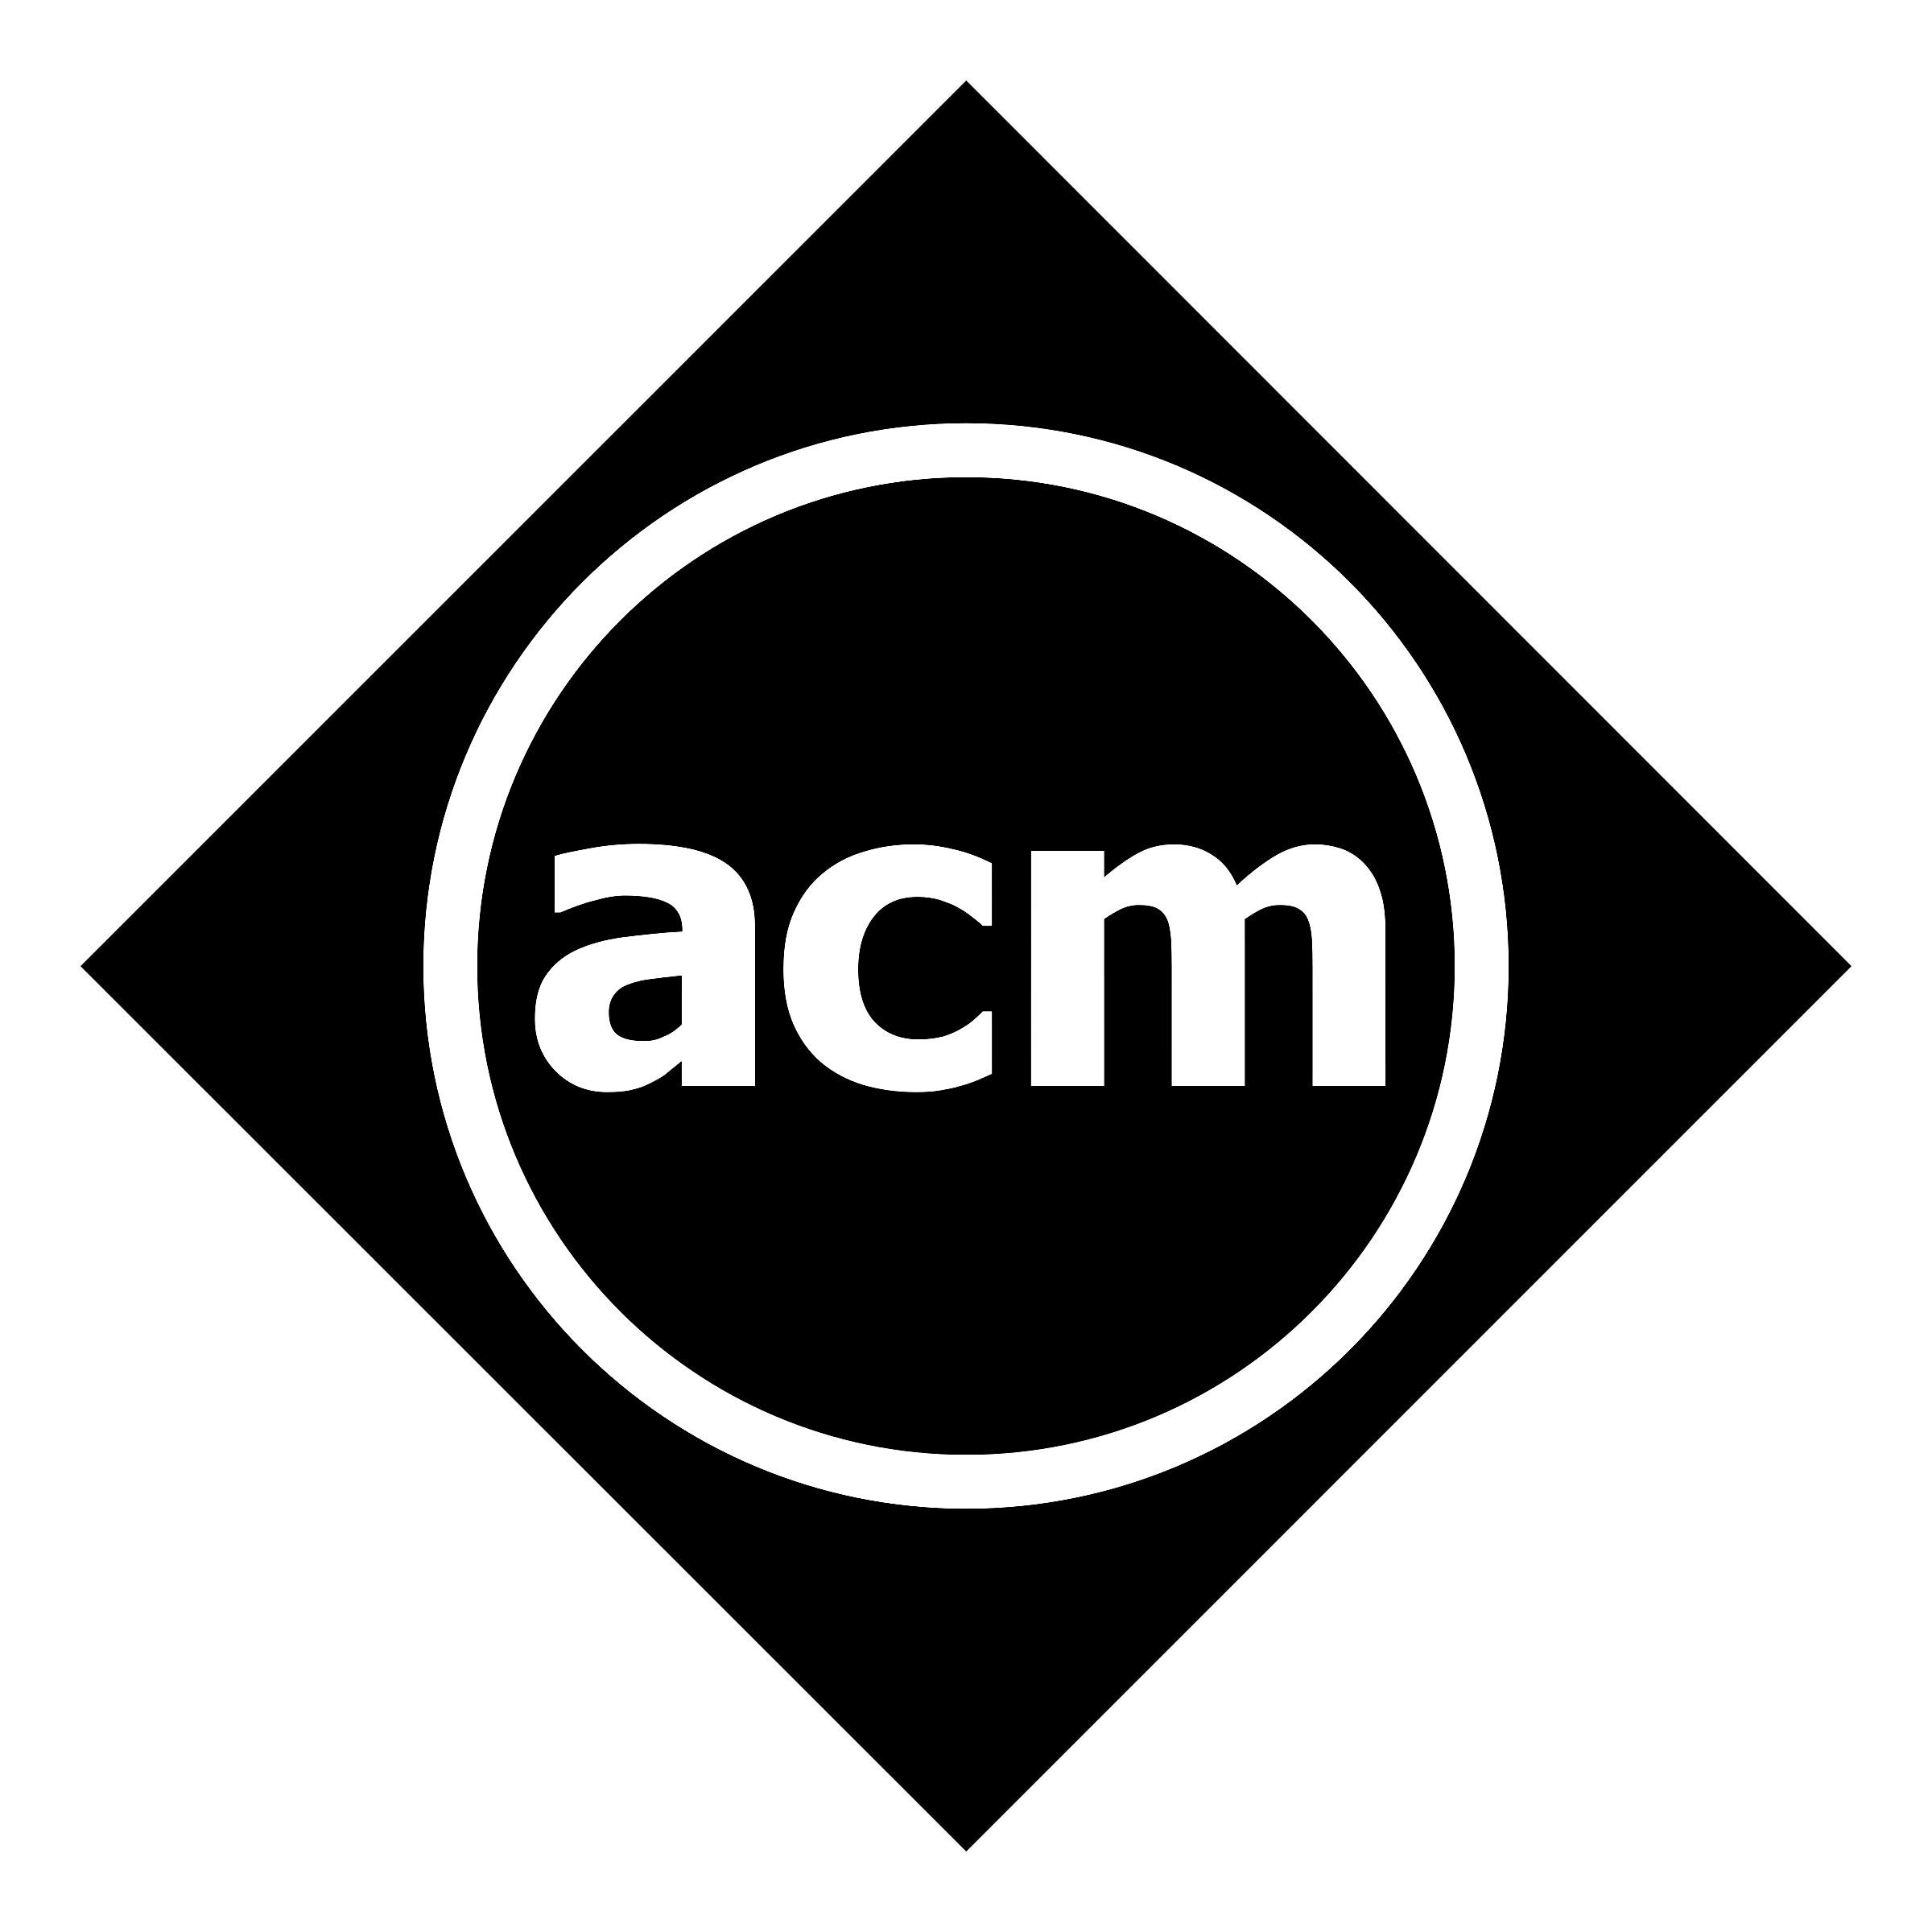 ACM Logo - ACM Logo PNG Transparent & SVG Vector - Freebie Supply